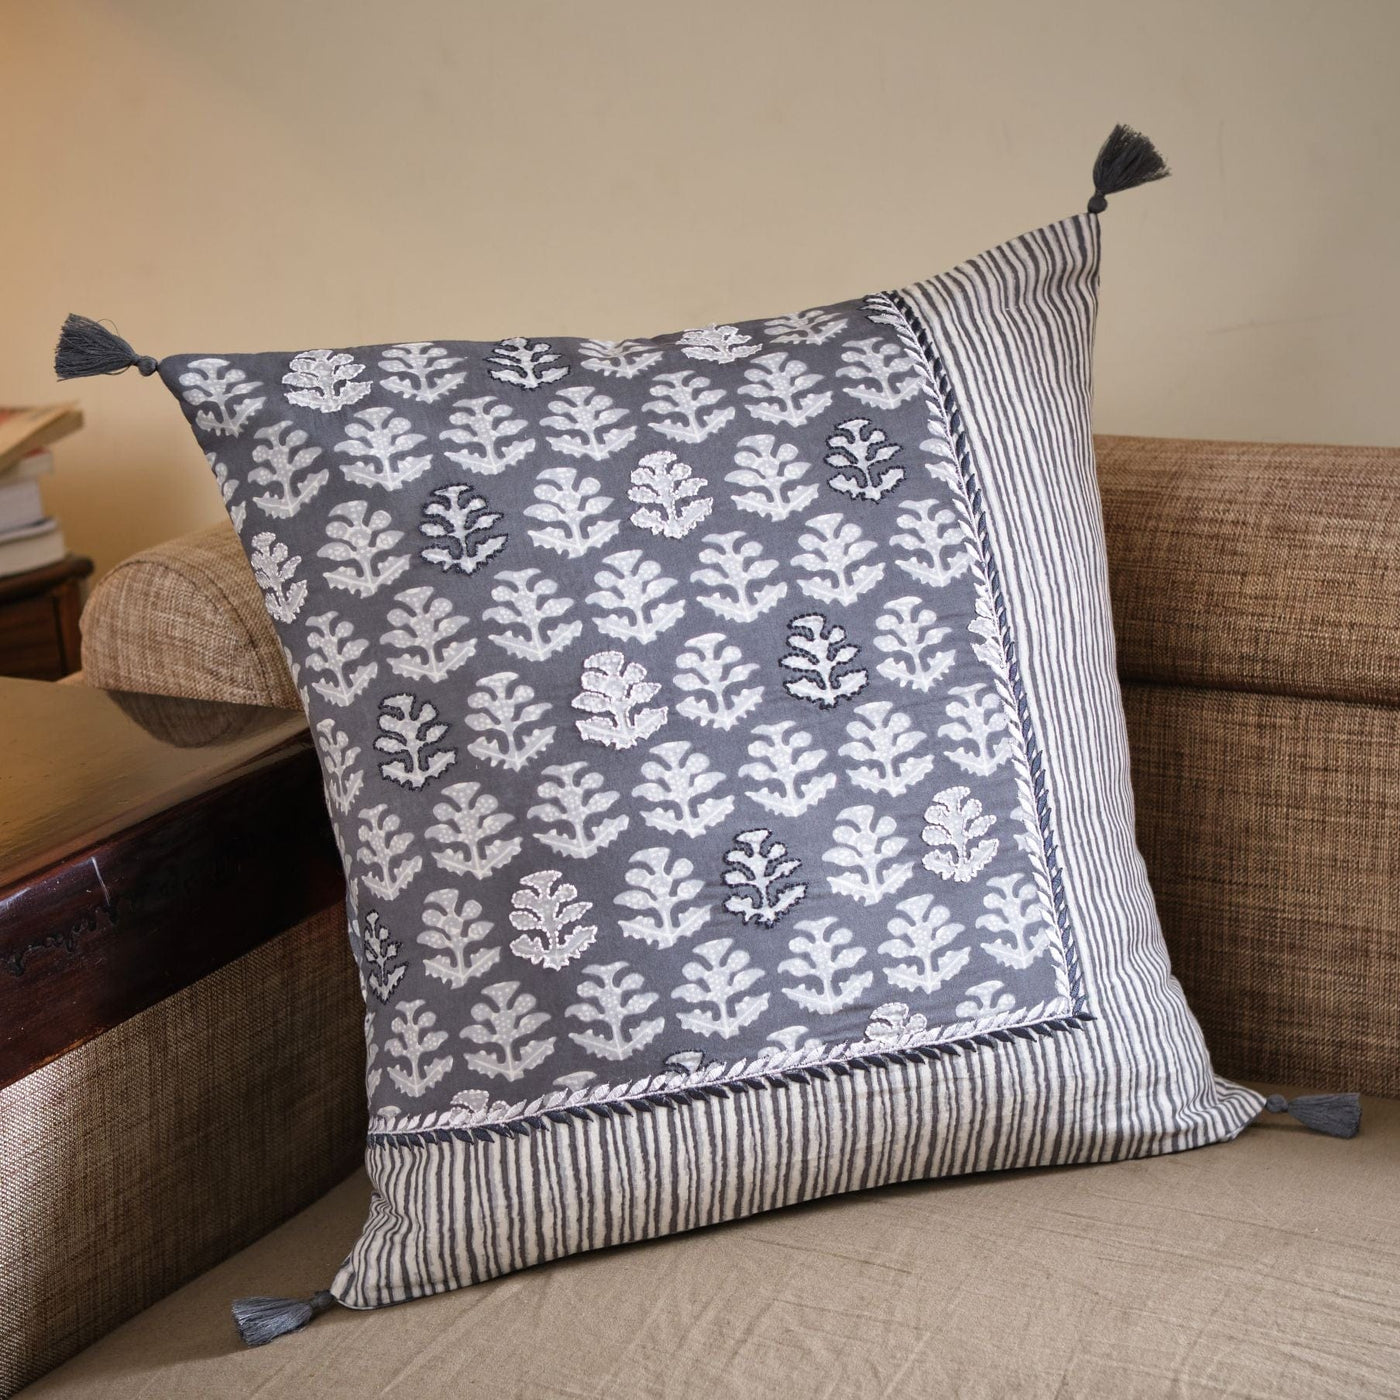 The Fabricrush  Pillowcases & Shams Grey Embroidered Cushion Cover